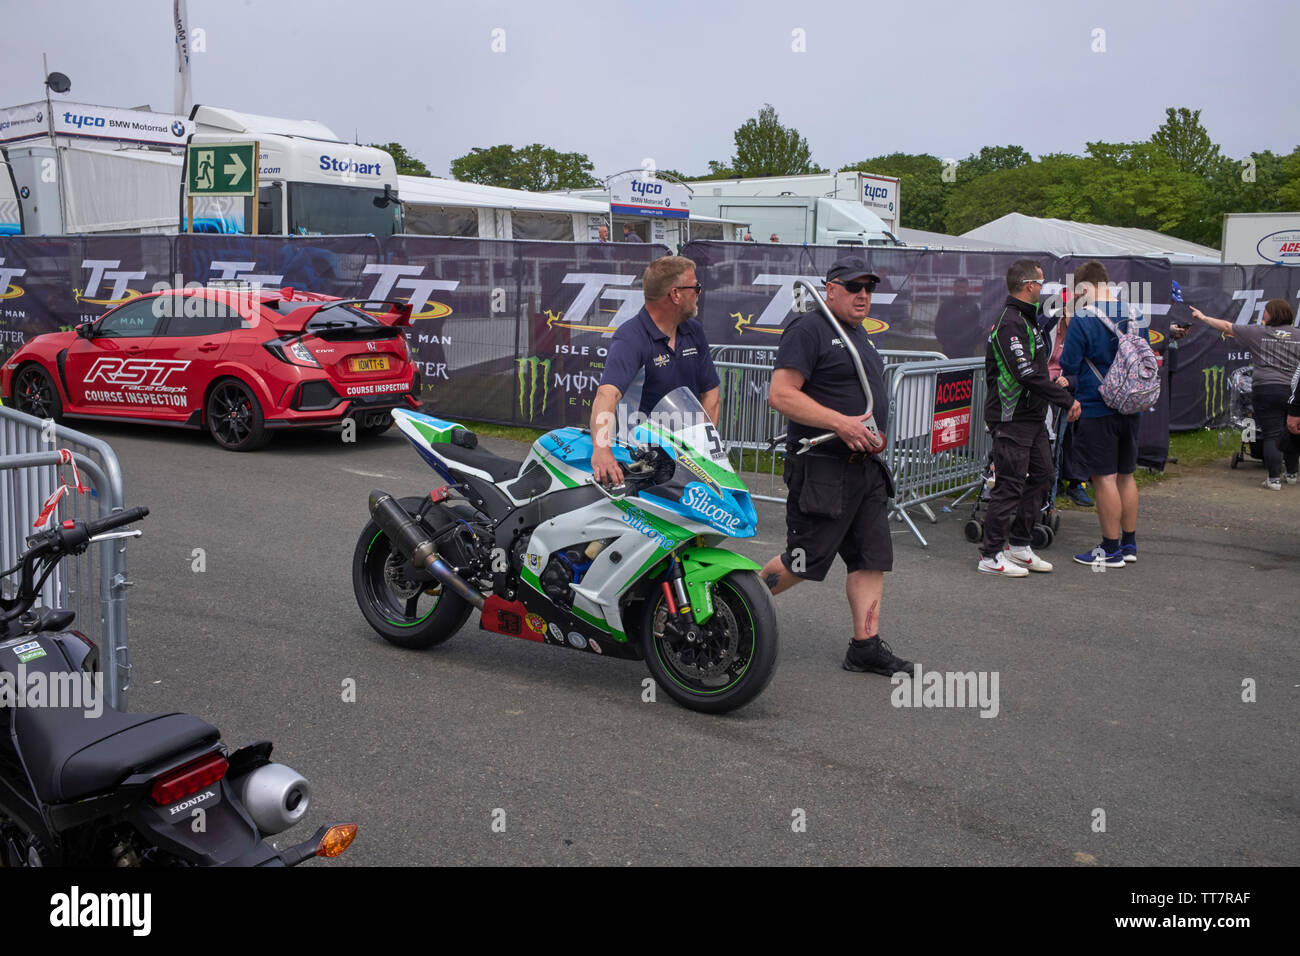 Members of Adrian Harrison’s team wheel back his 1000 Kawasaki bike after the 2019 Senior TT race Stock Photo